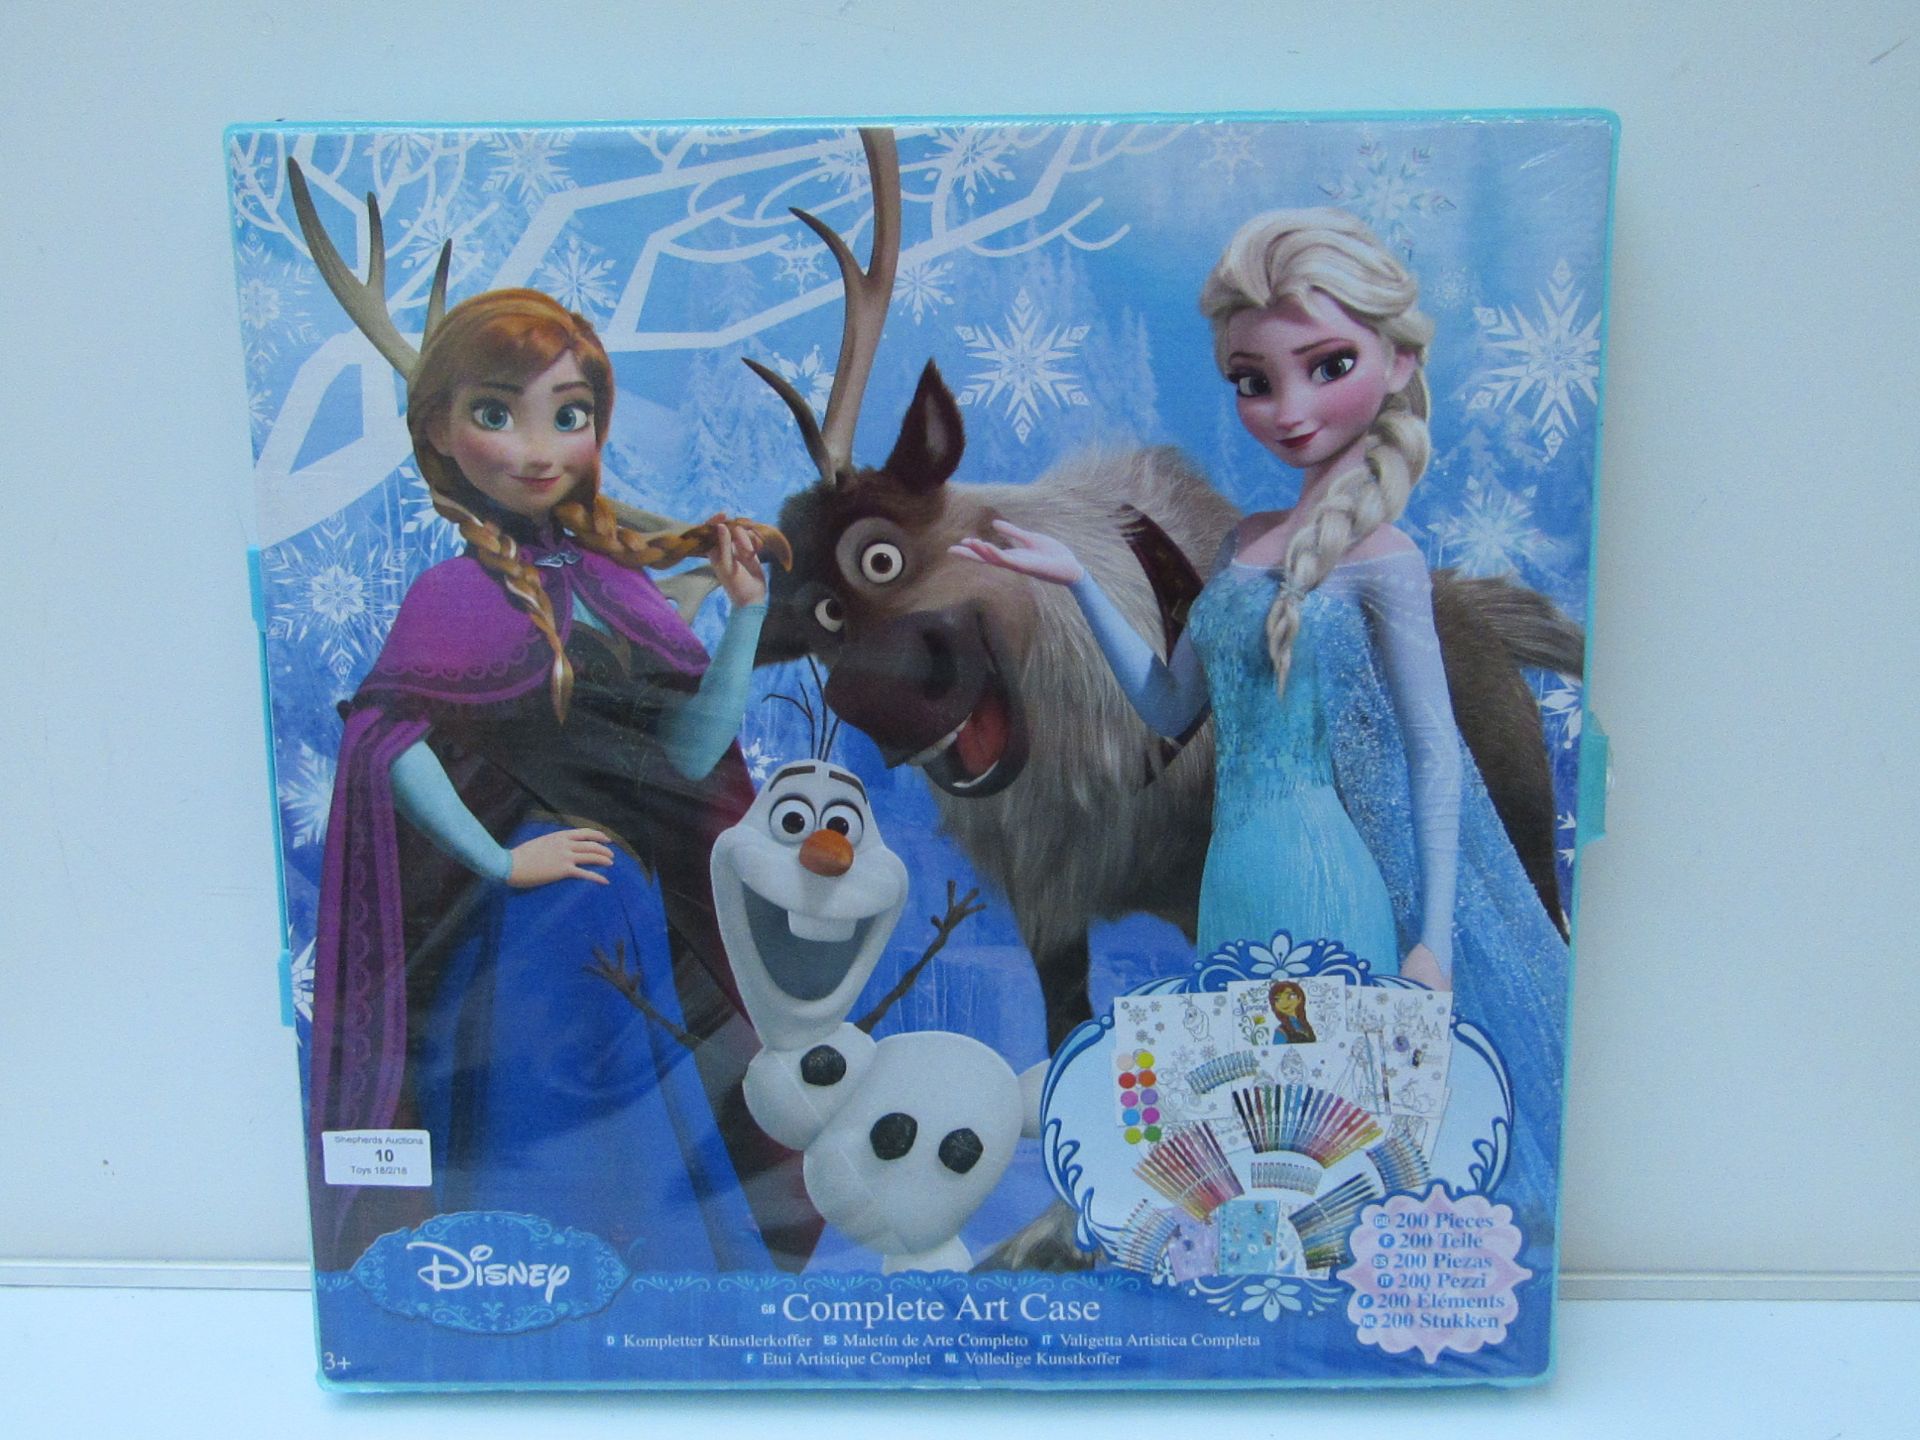 Disney Frozen complete art case (200 pieces), has slight tear in outer plastic but complete.